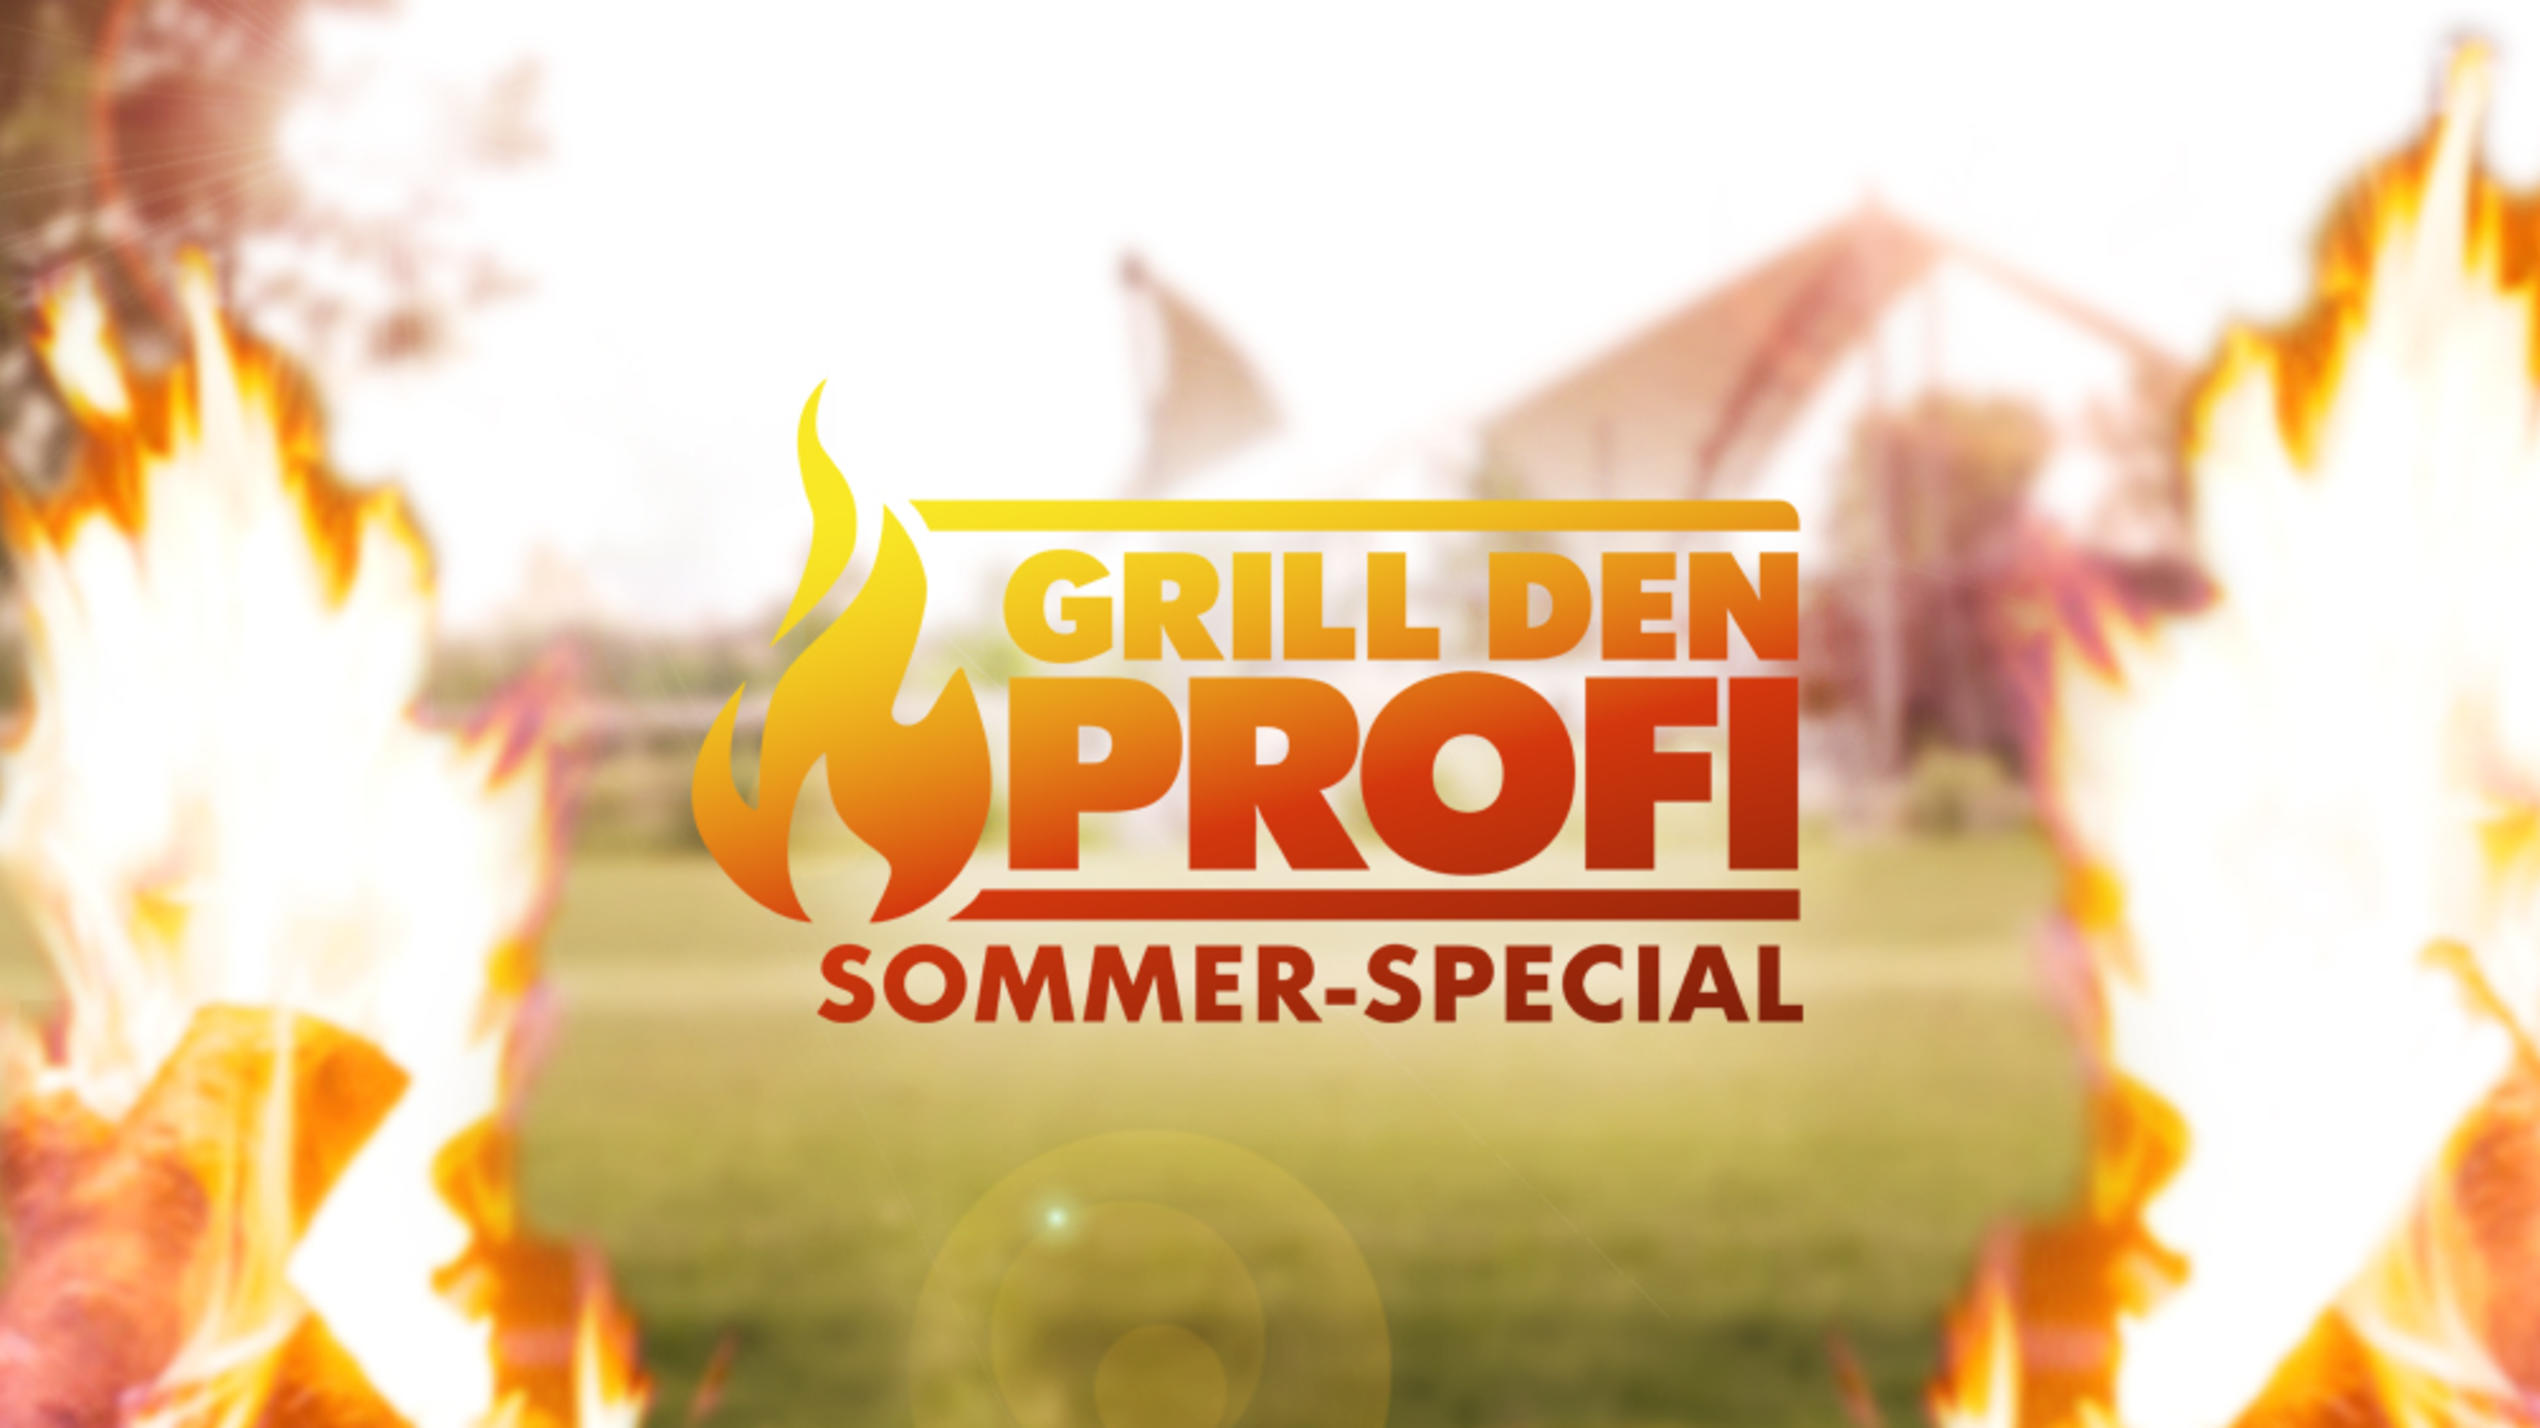 Das "Grill den Profi Sommer-Special" steht an.